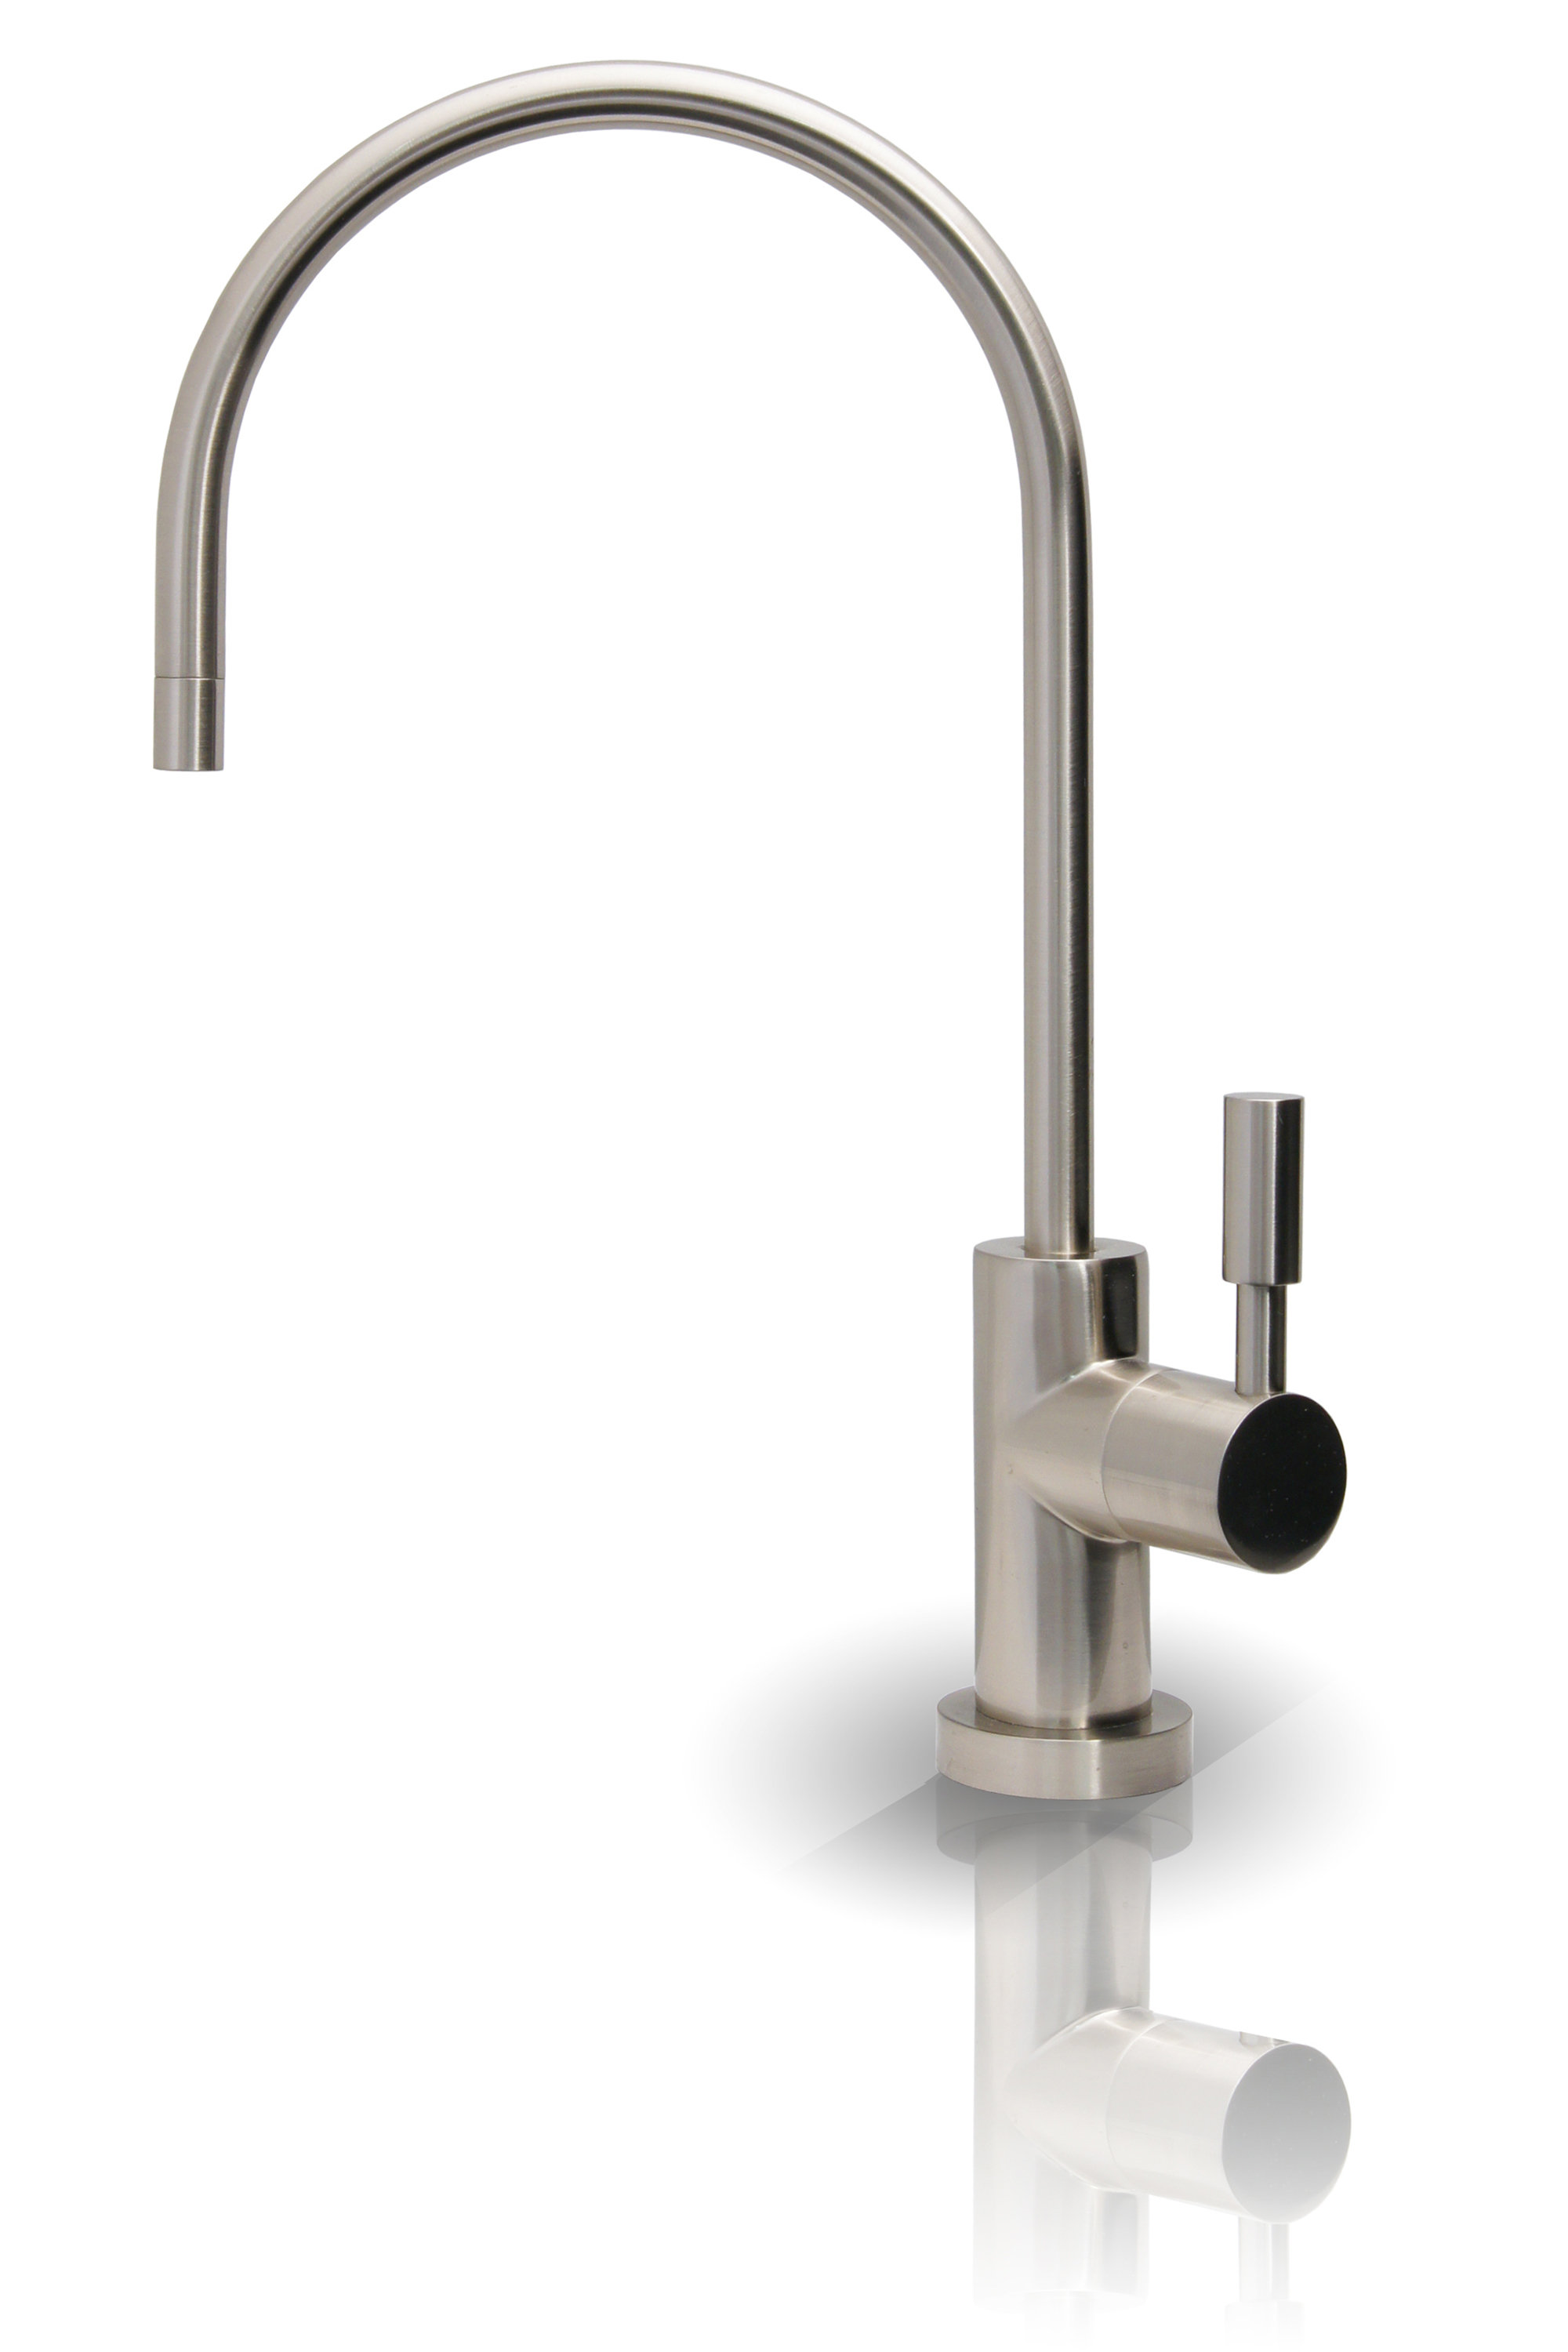 Apec Water Faucet Cd Np Ceramic Disc Designer Faucet Non Air Gap